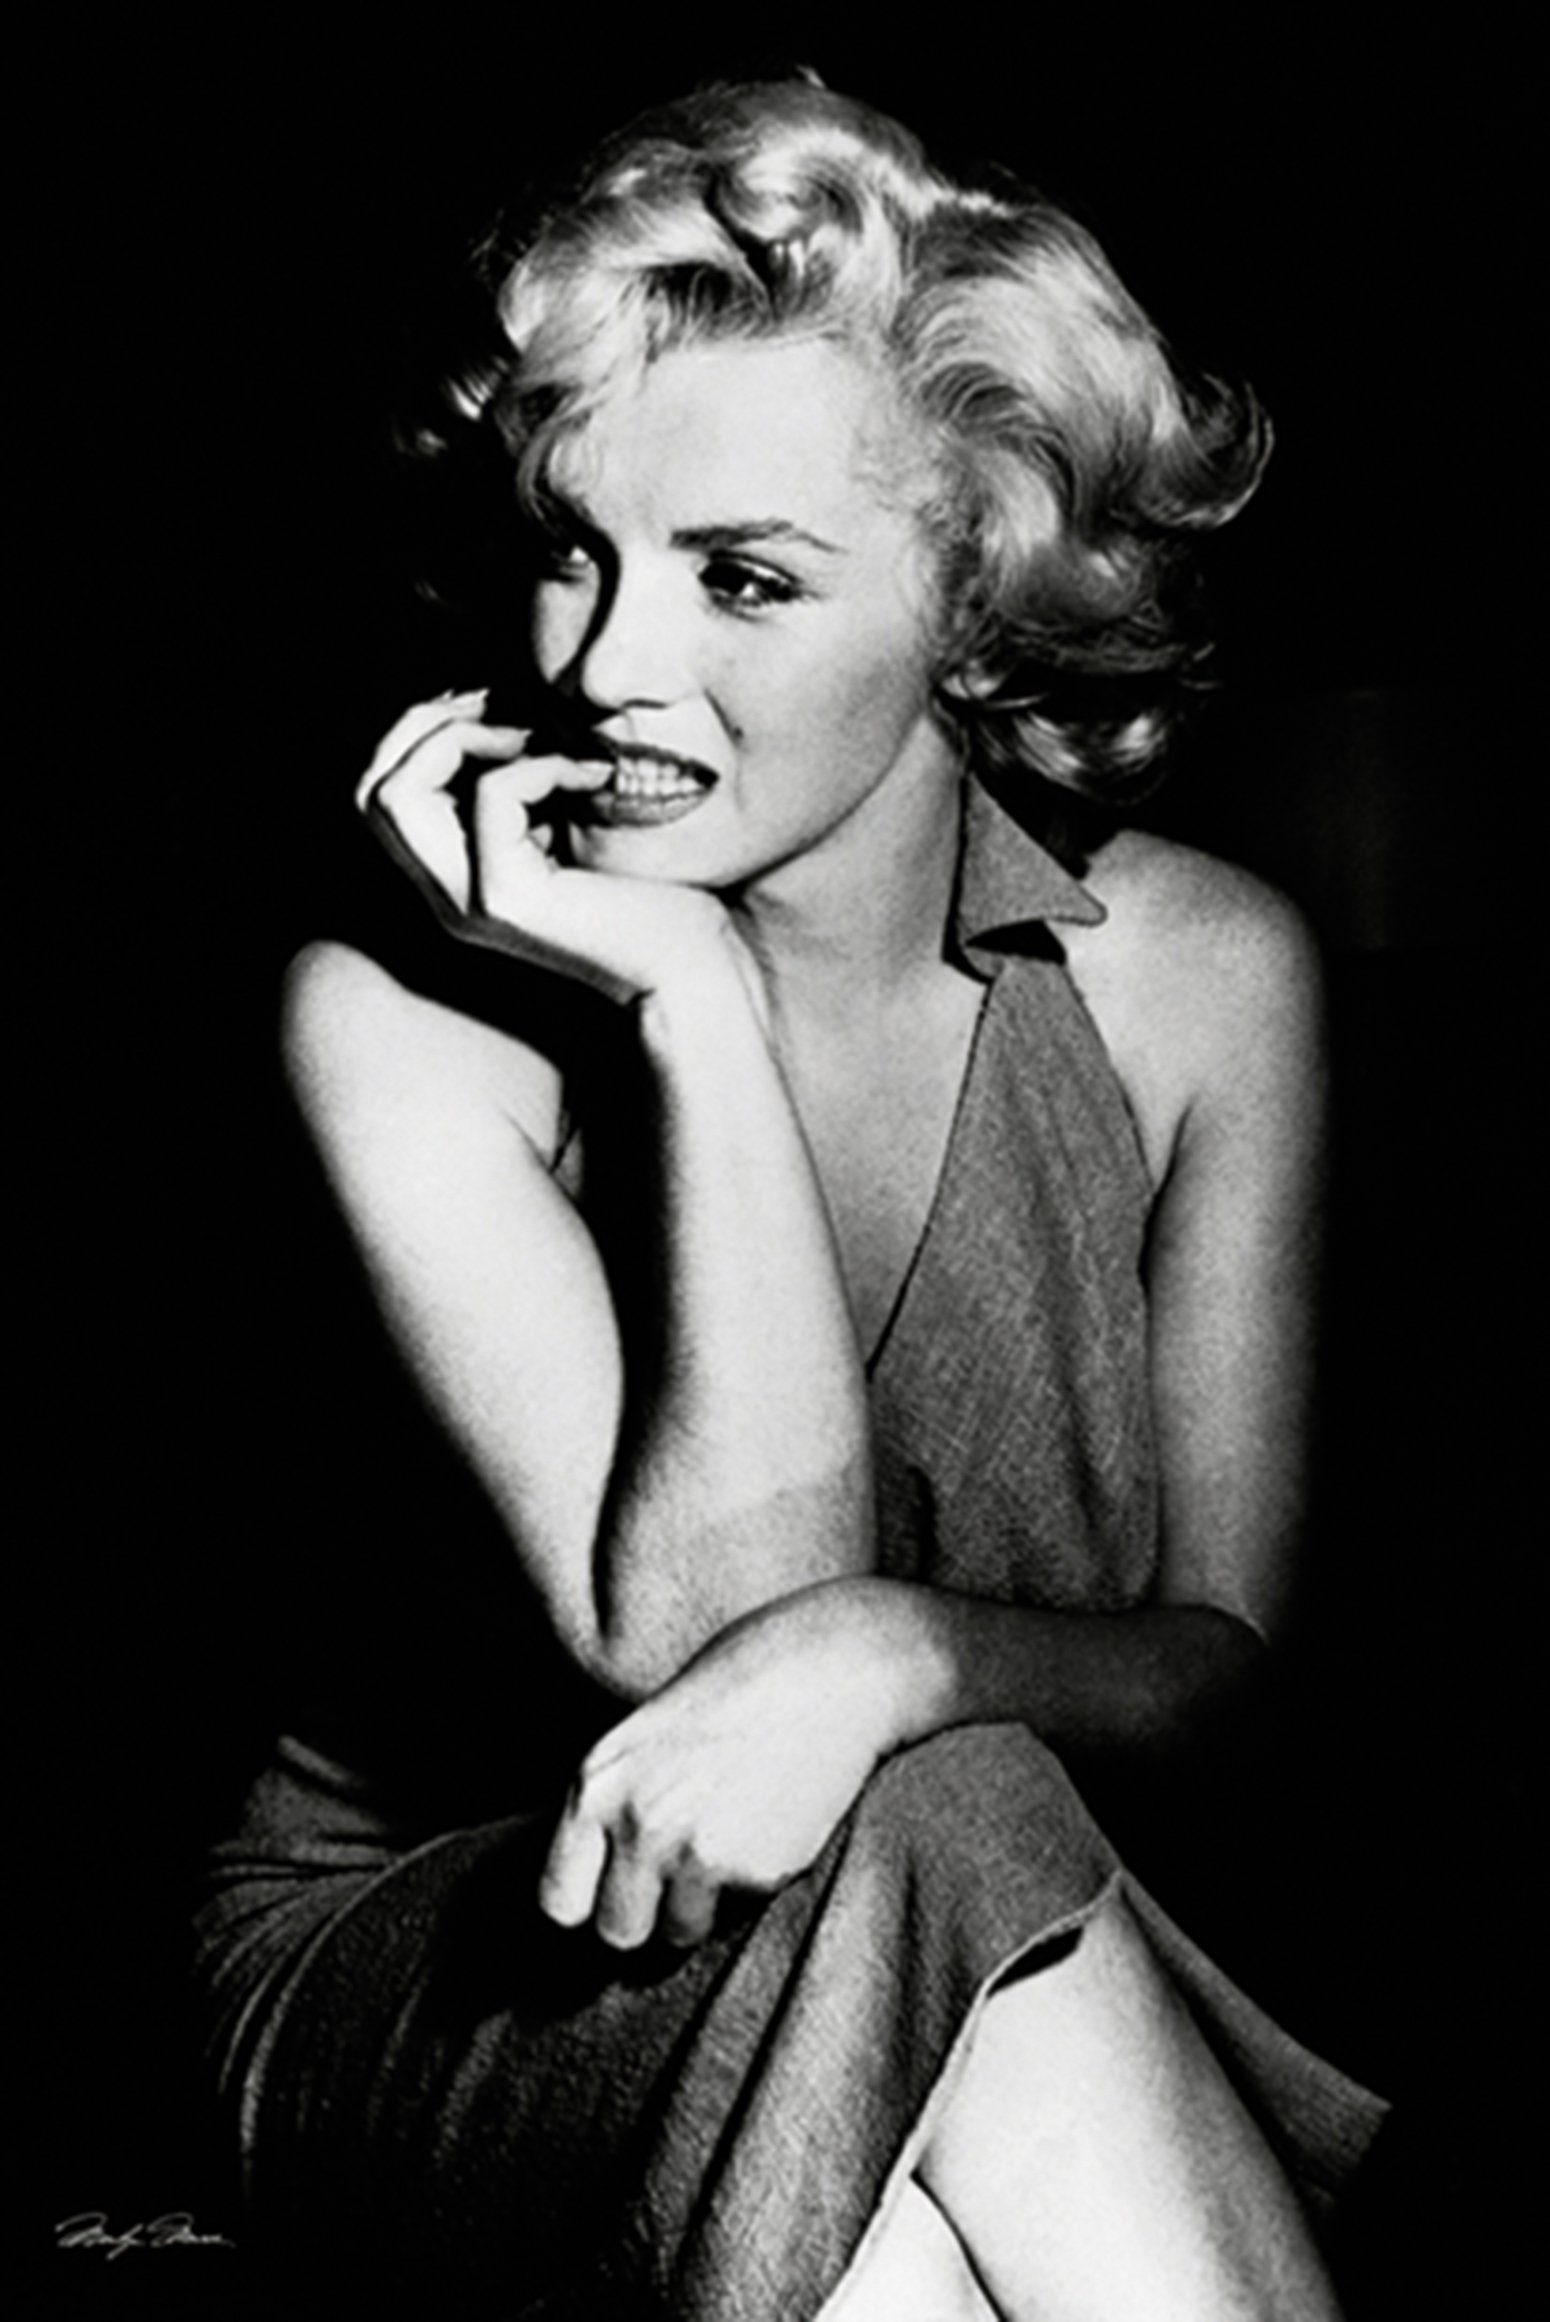 PYRAMID Poster Marilyn Monroe Poster 61 x 91,5 cm